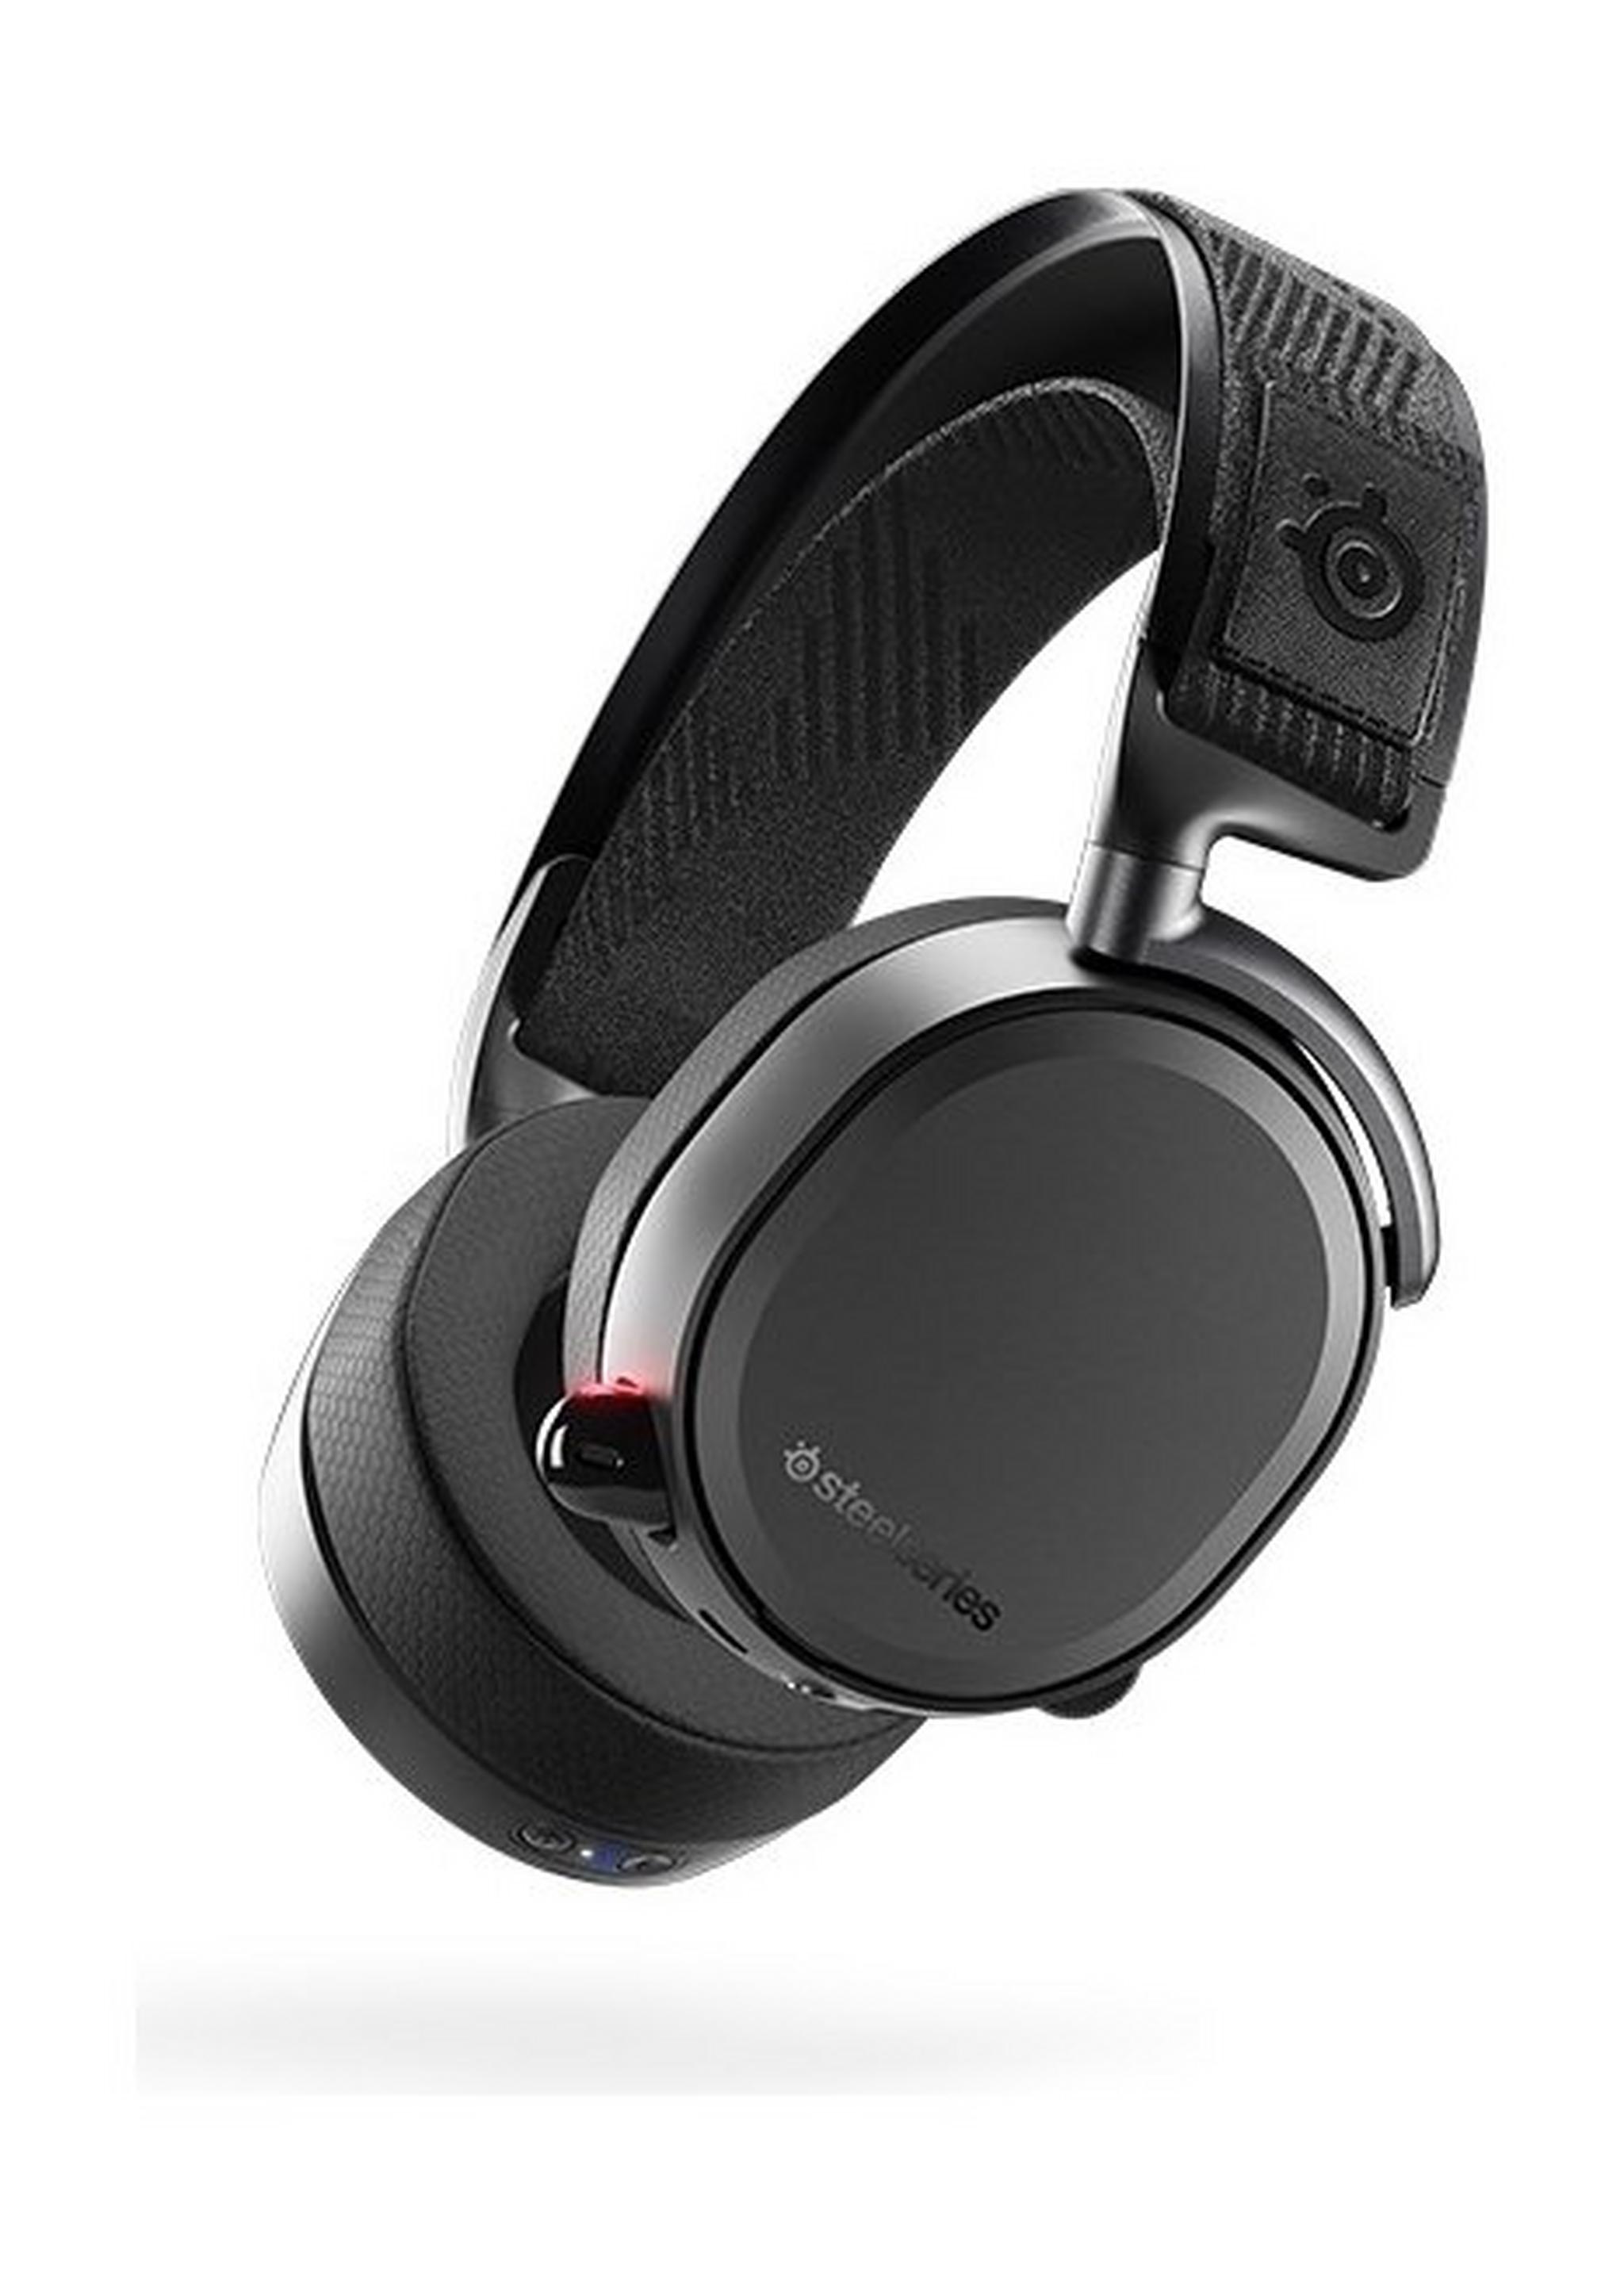 Steelseries Arctis Pro Wireless Gaming Headset - Black